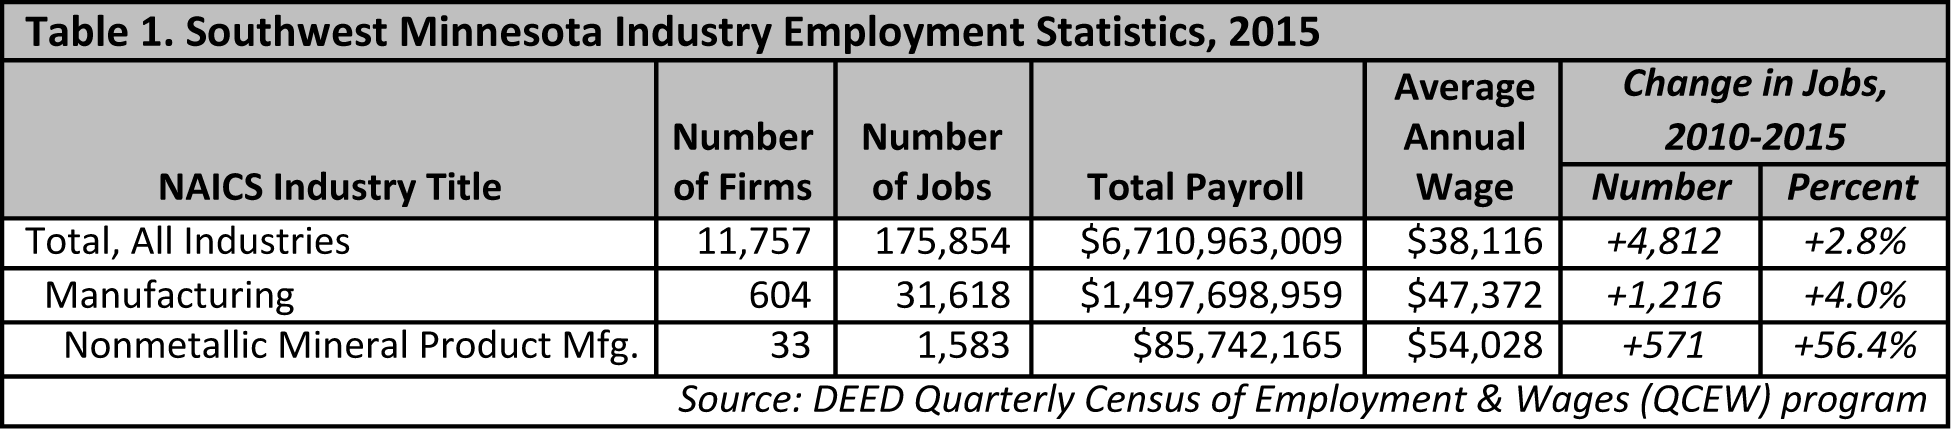 Southwest Minnesota Industry Employment Statistics, 2015